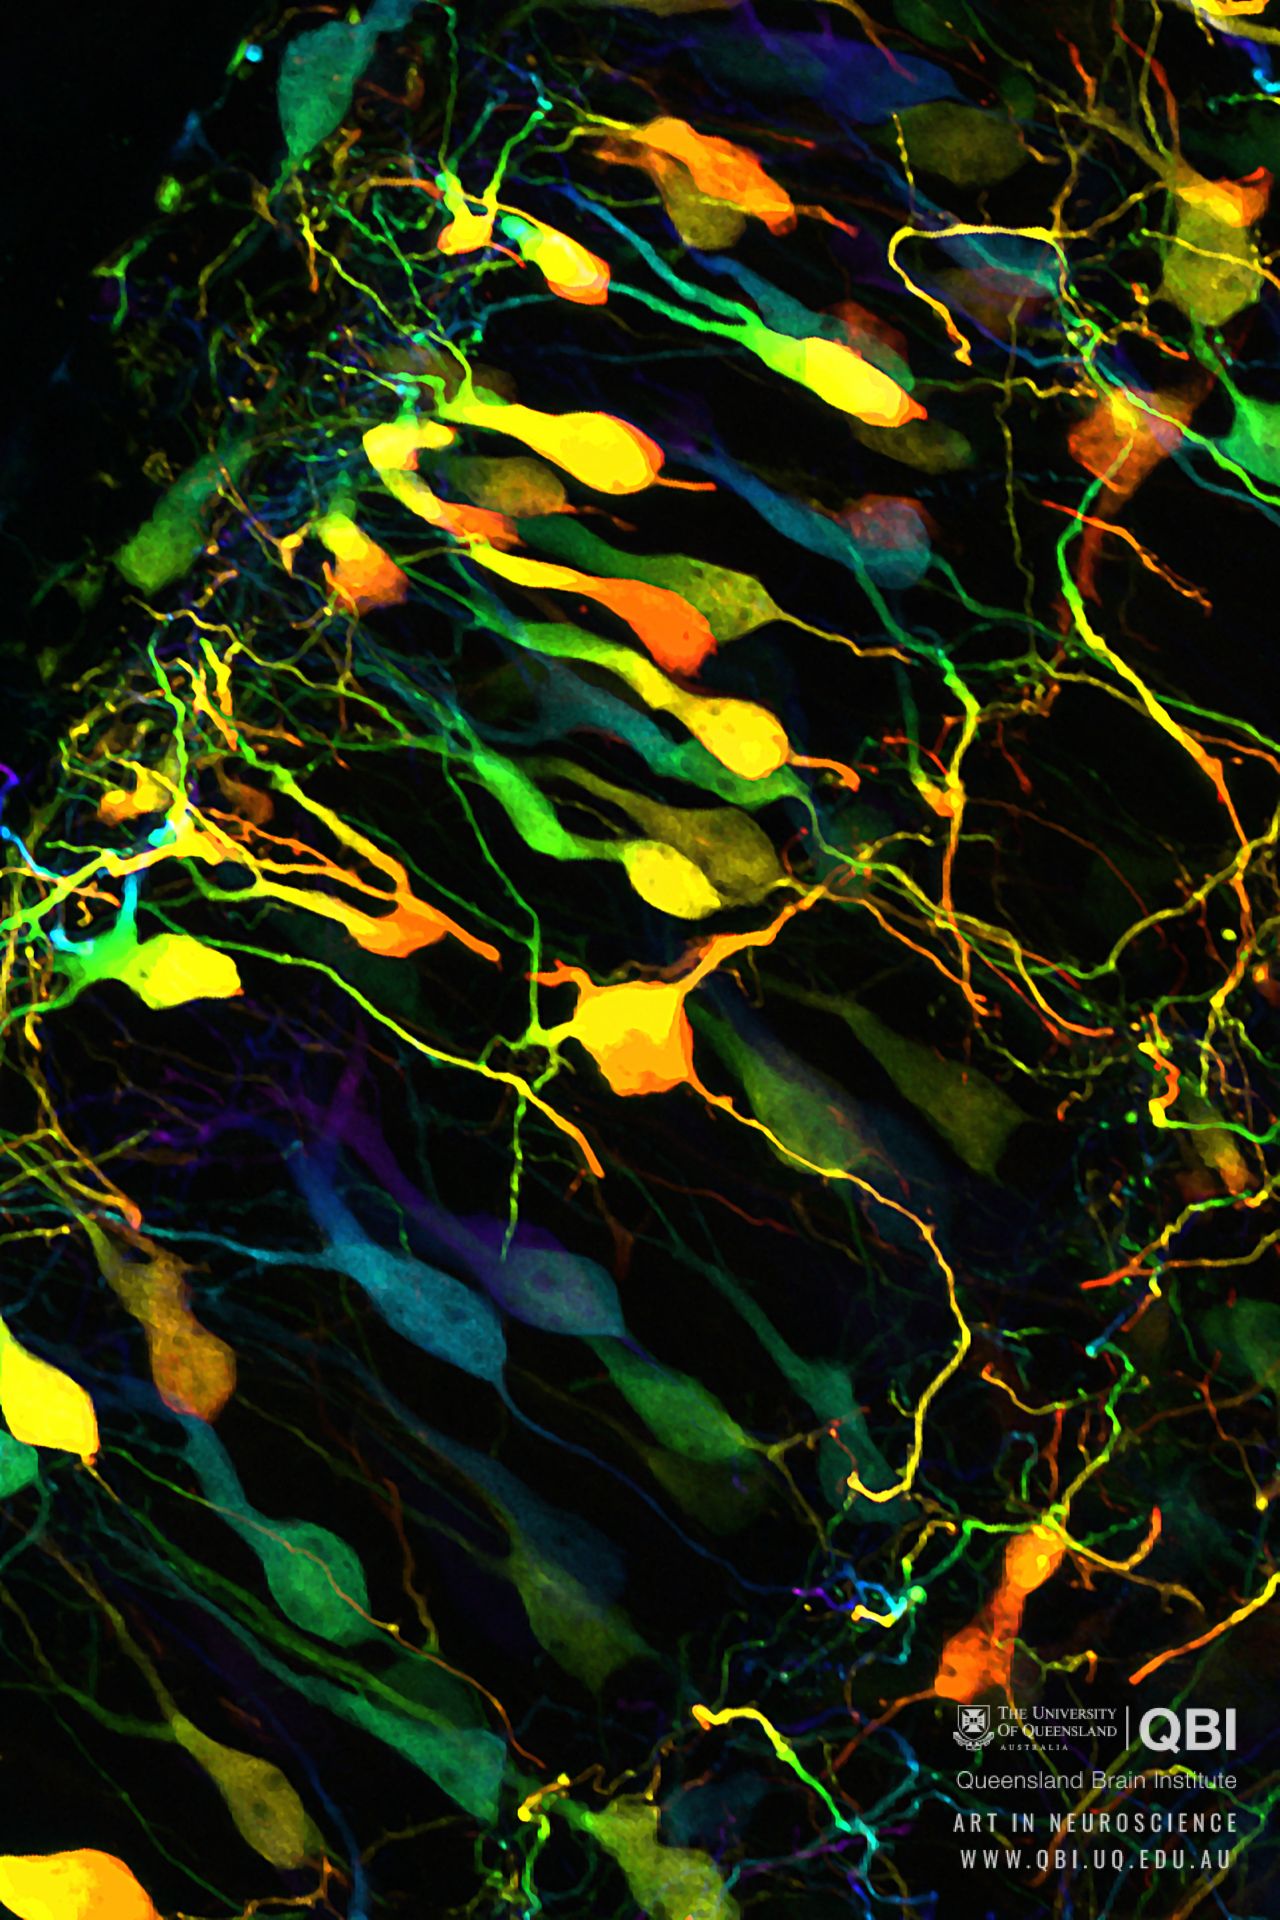 Best neuroscience image of 2016 Brain Institute